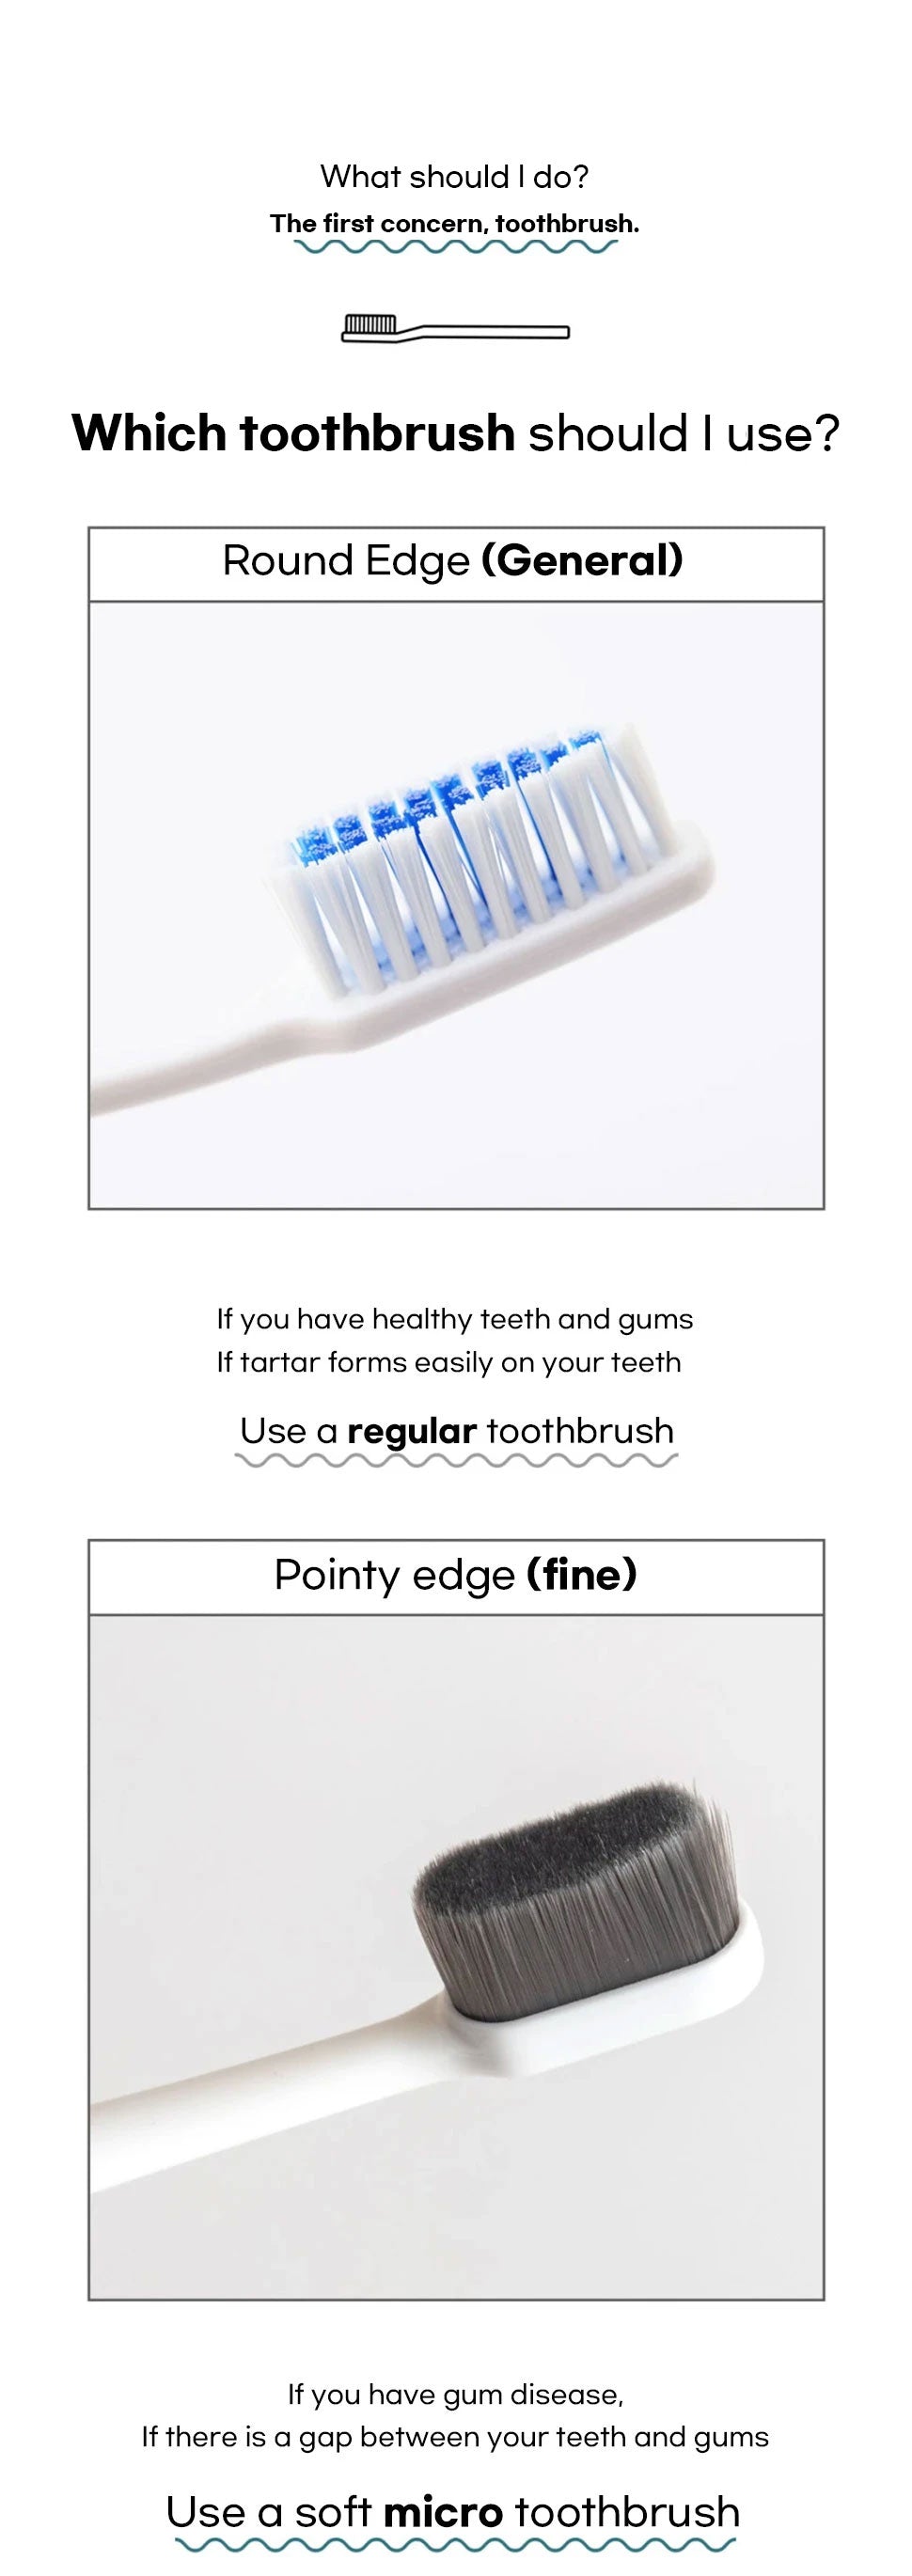 mansol toothbrush mouth health australia korea shopping